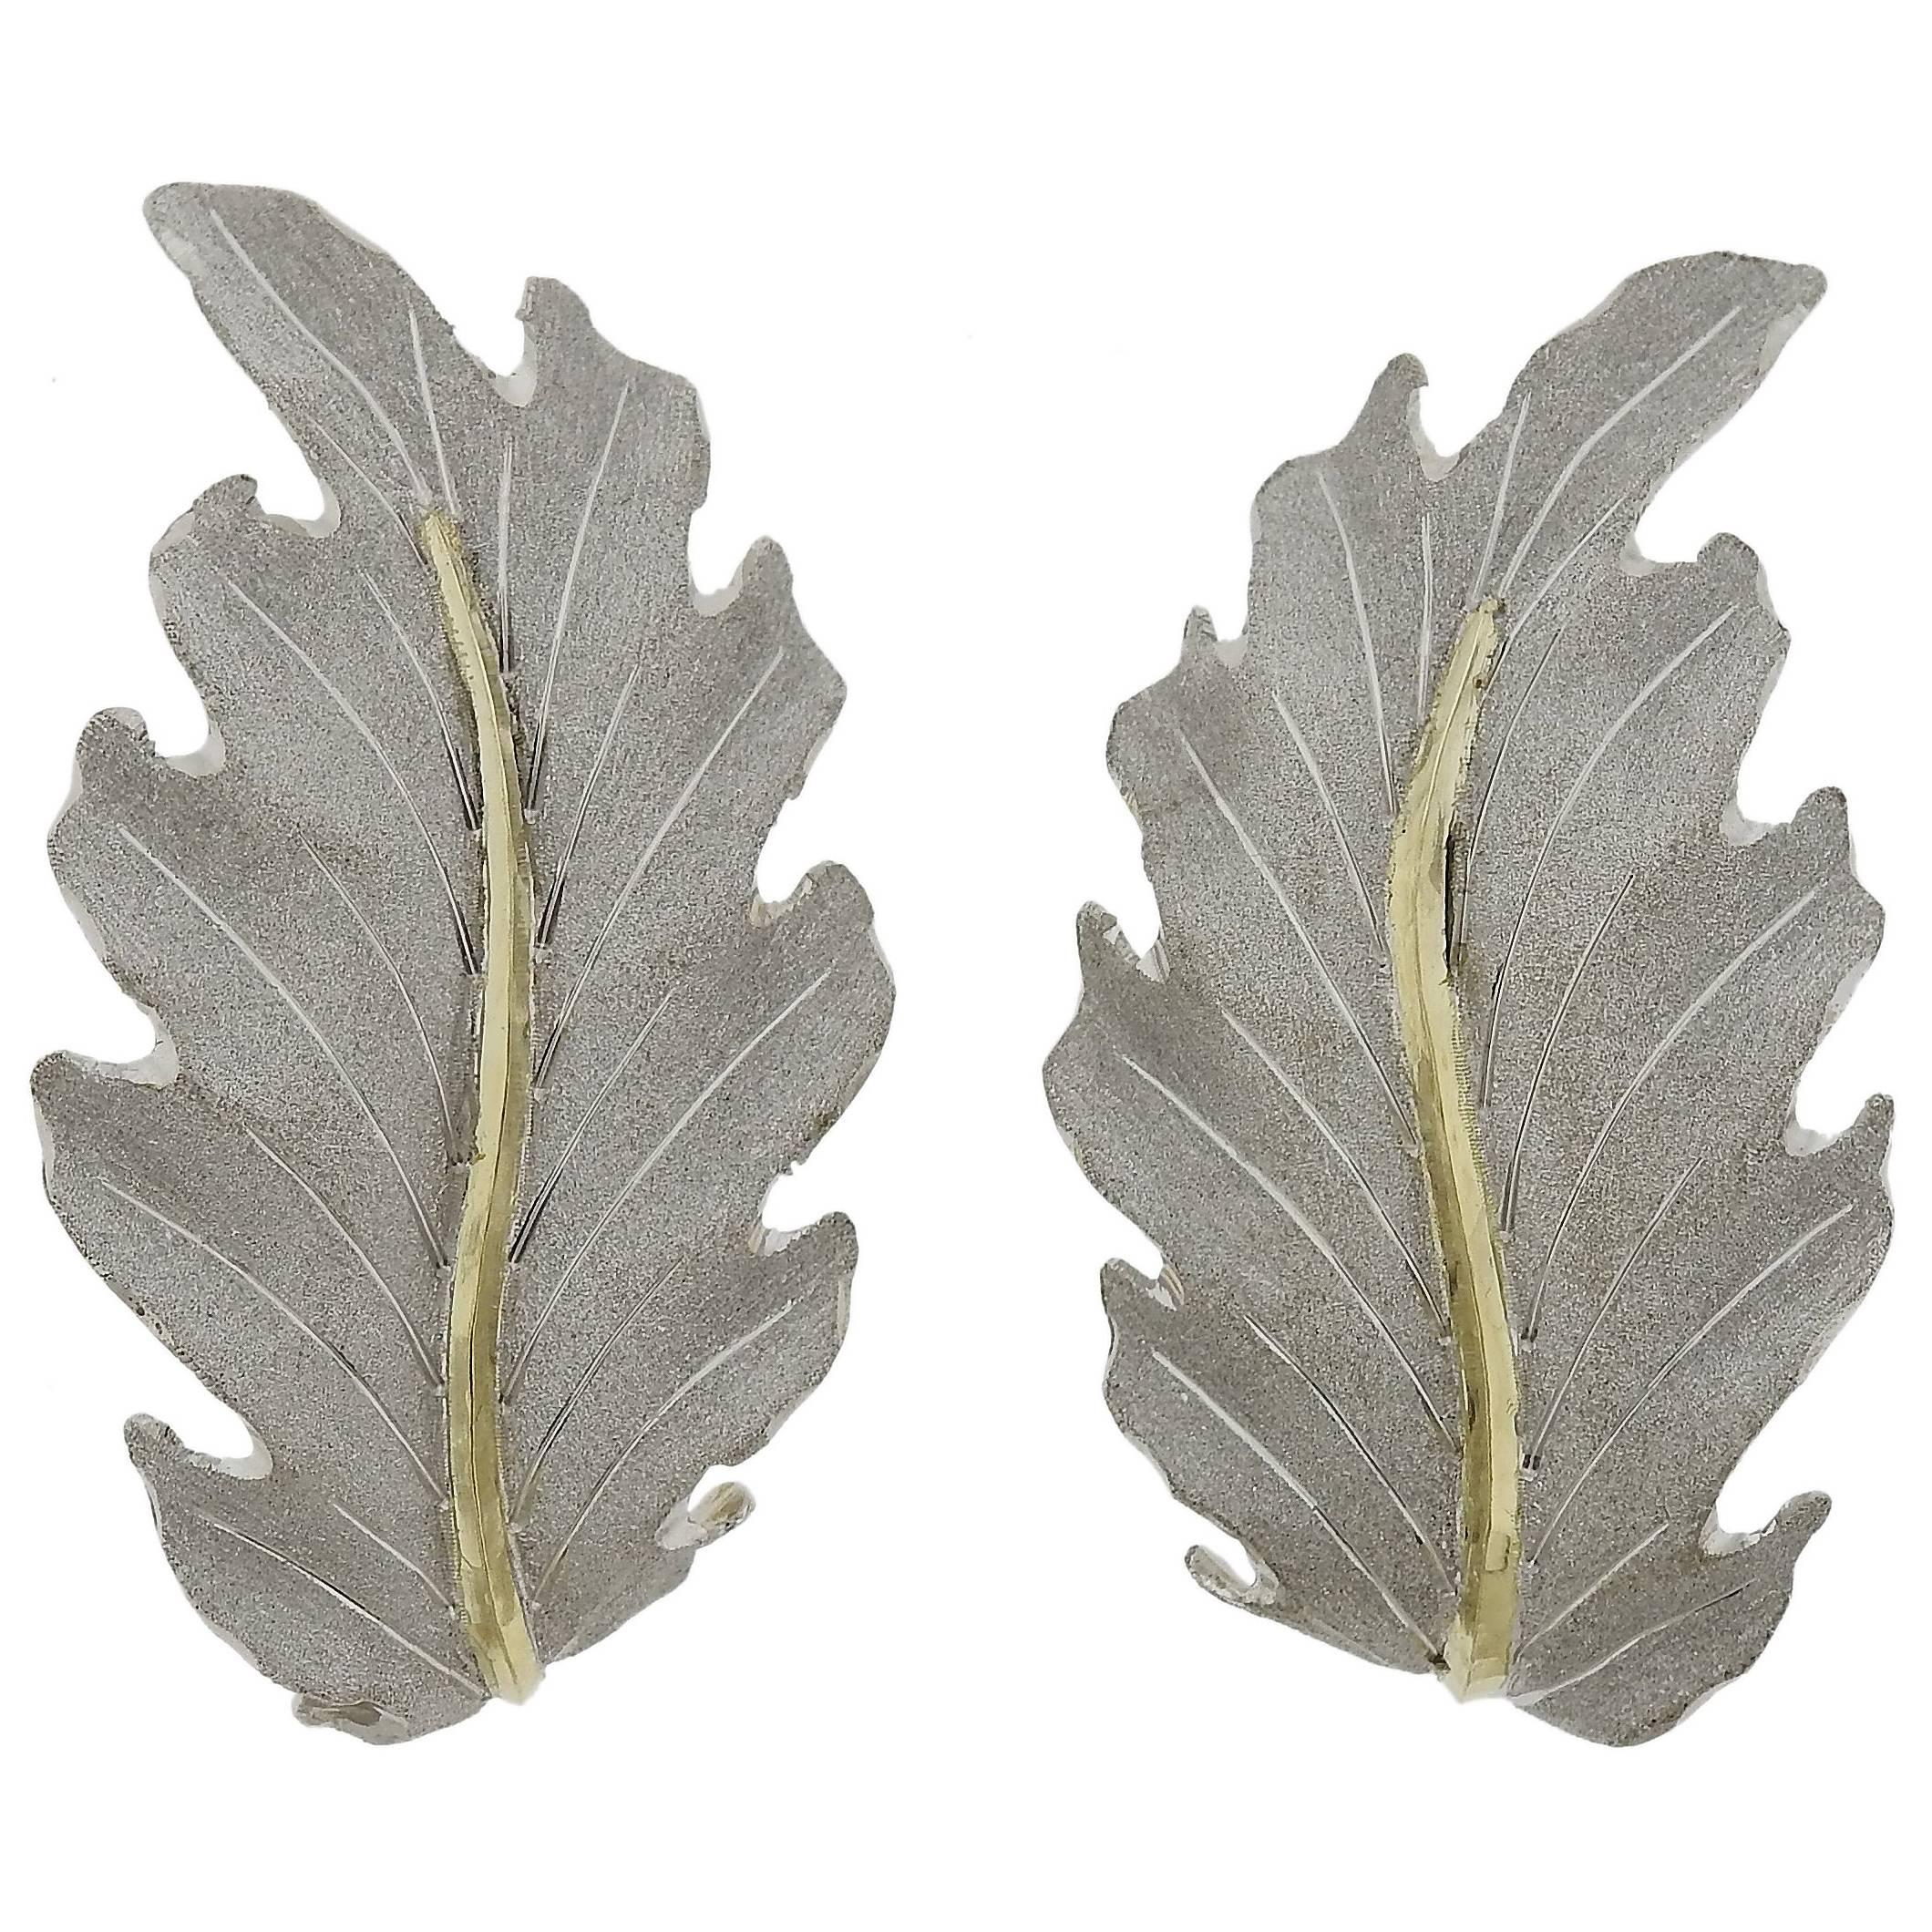 Buccellati Gold Sterling Silver Large Leaf Earrings